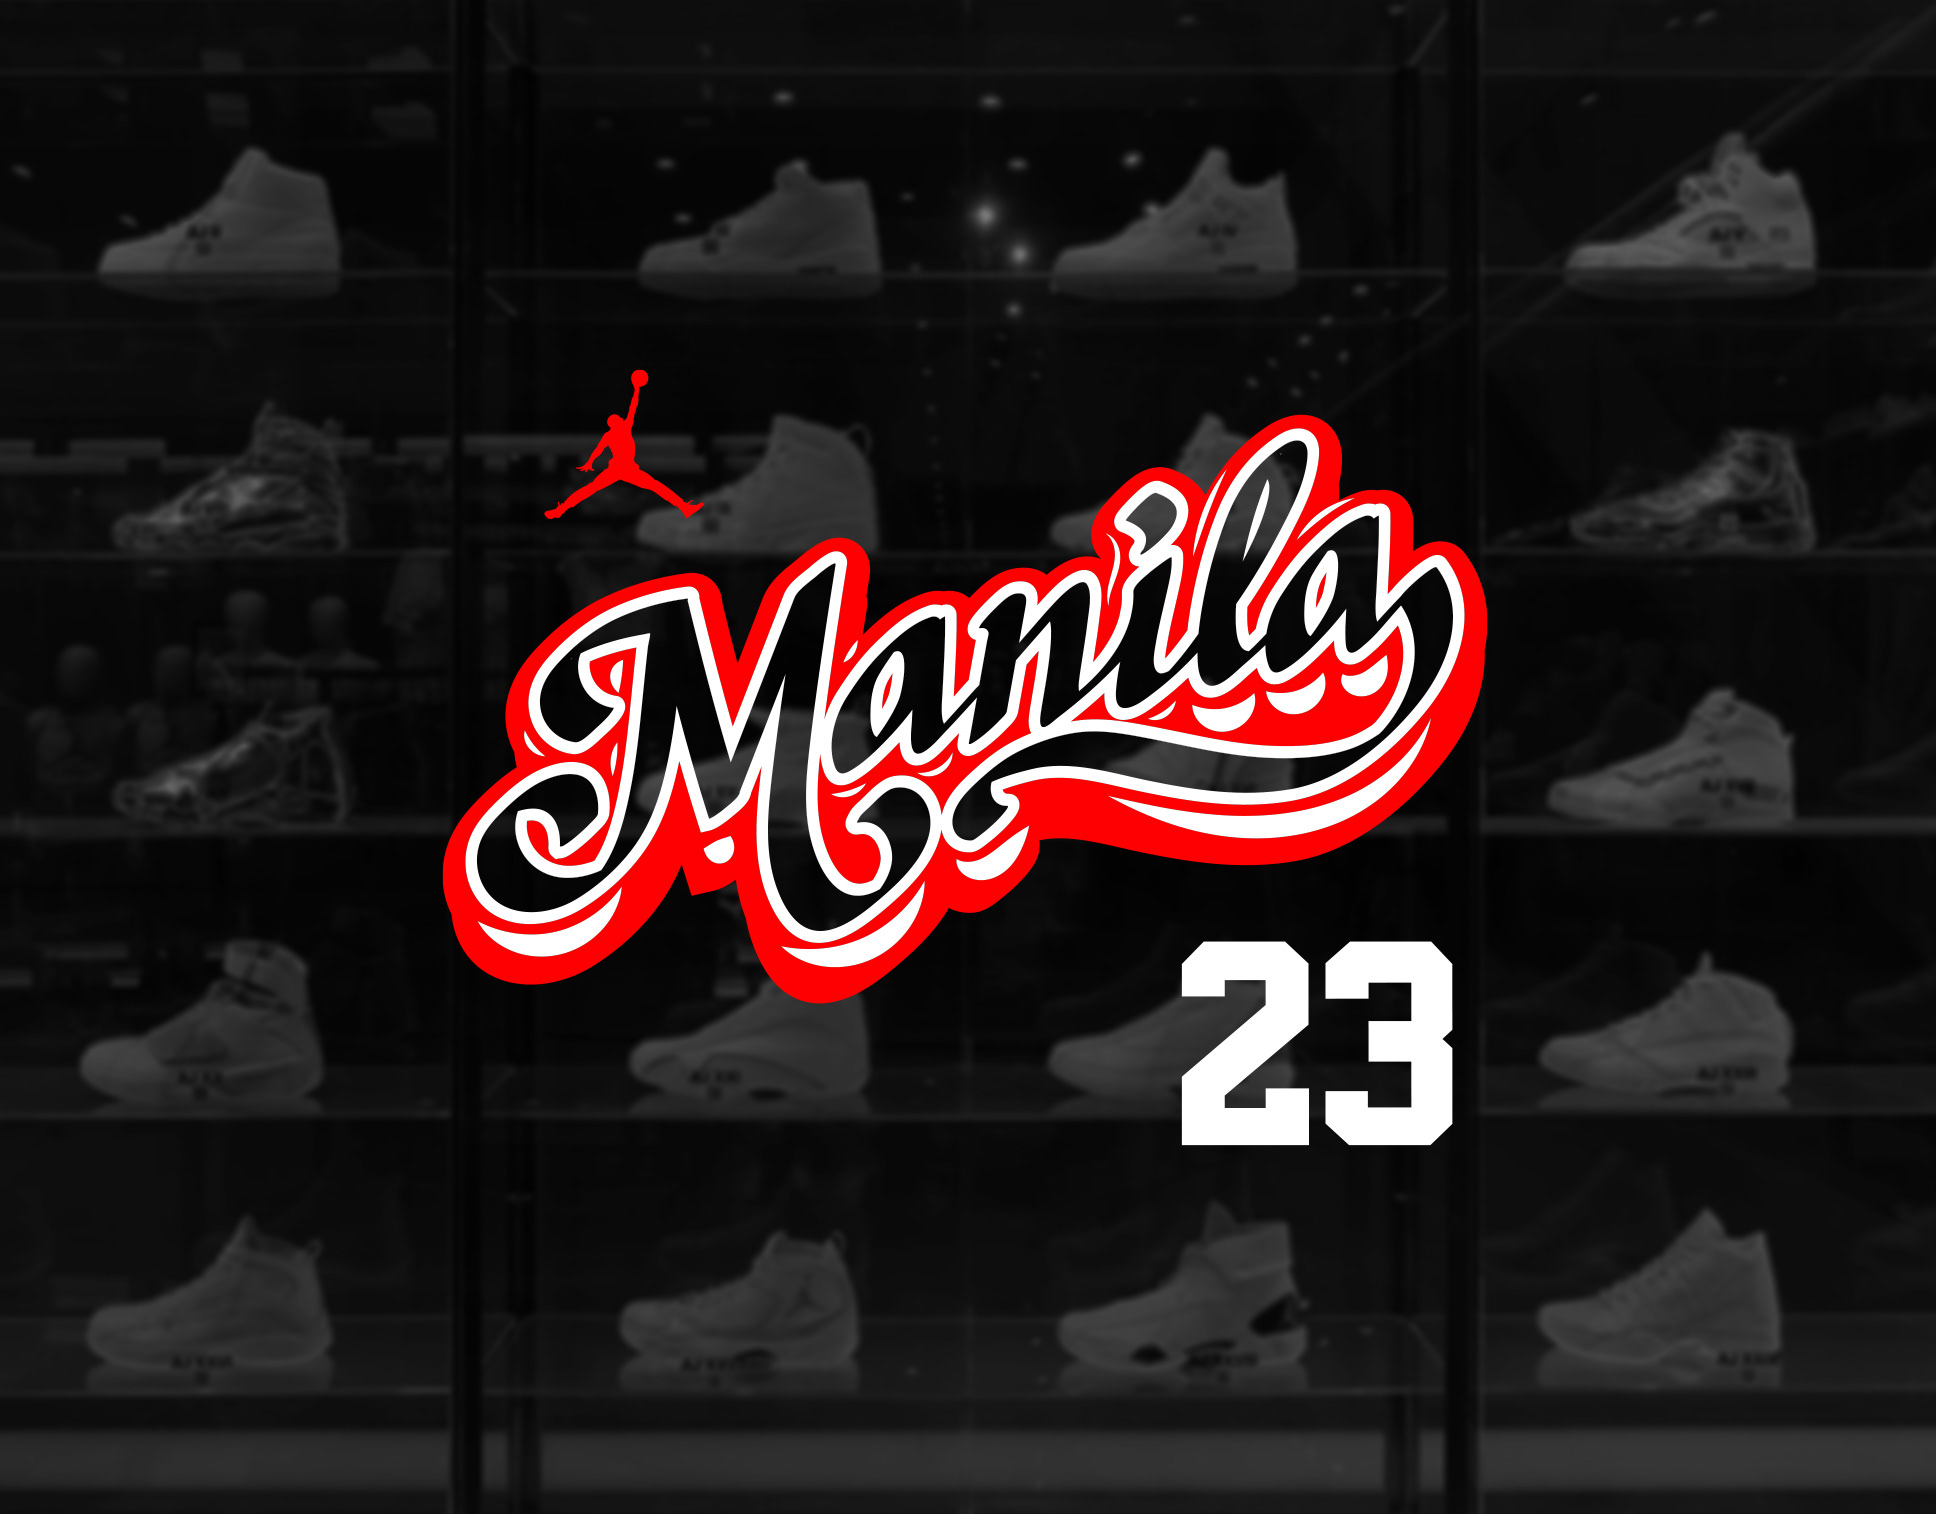 Nike Cortez 40th anniversary — Jom Pringpong